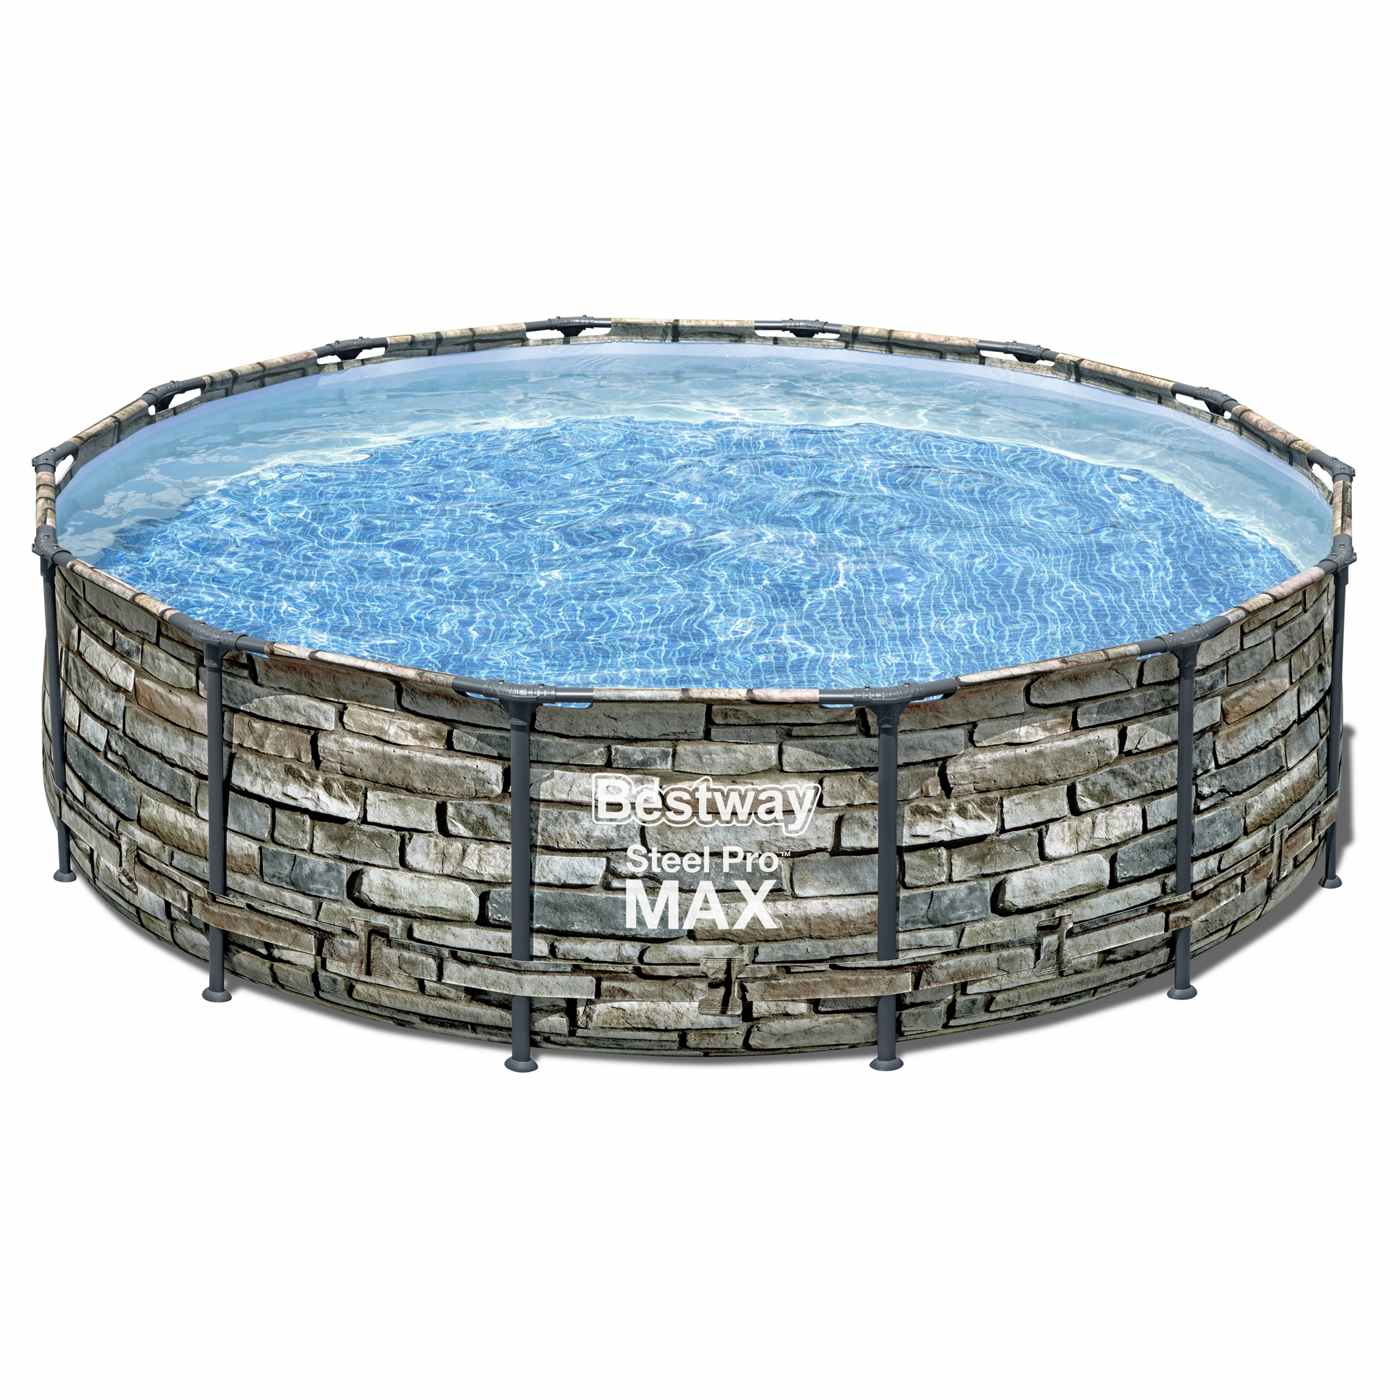 Bestway Steel Pro MAX Round Above Ground Pool Set; image 2 of 6